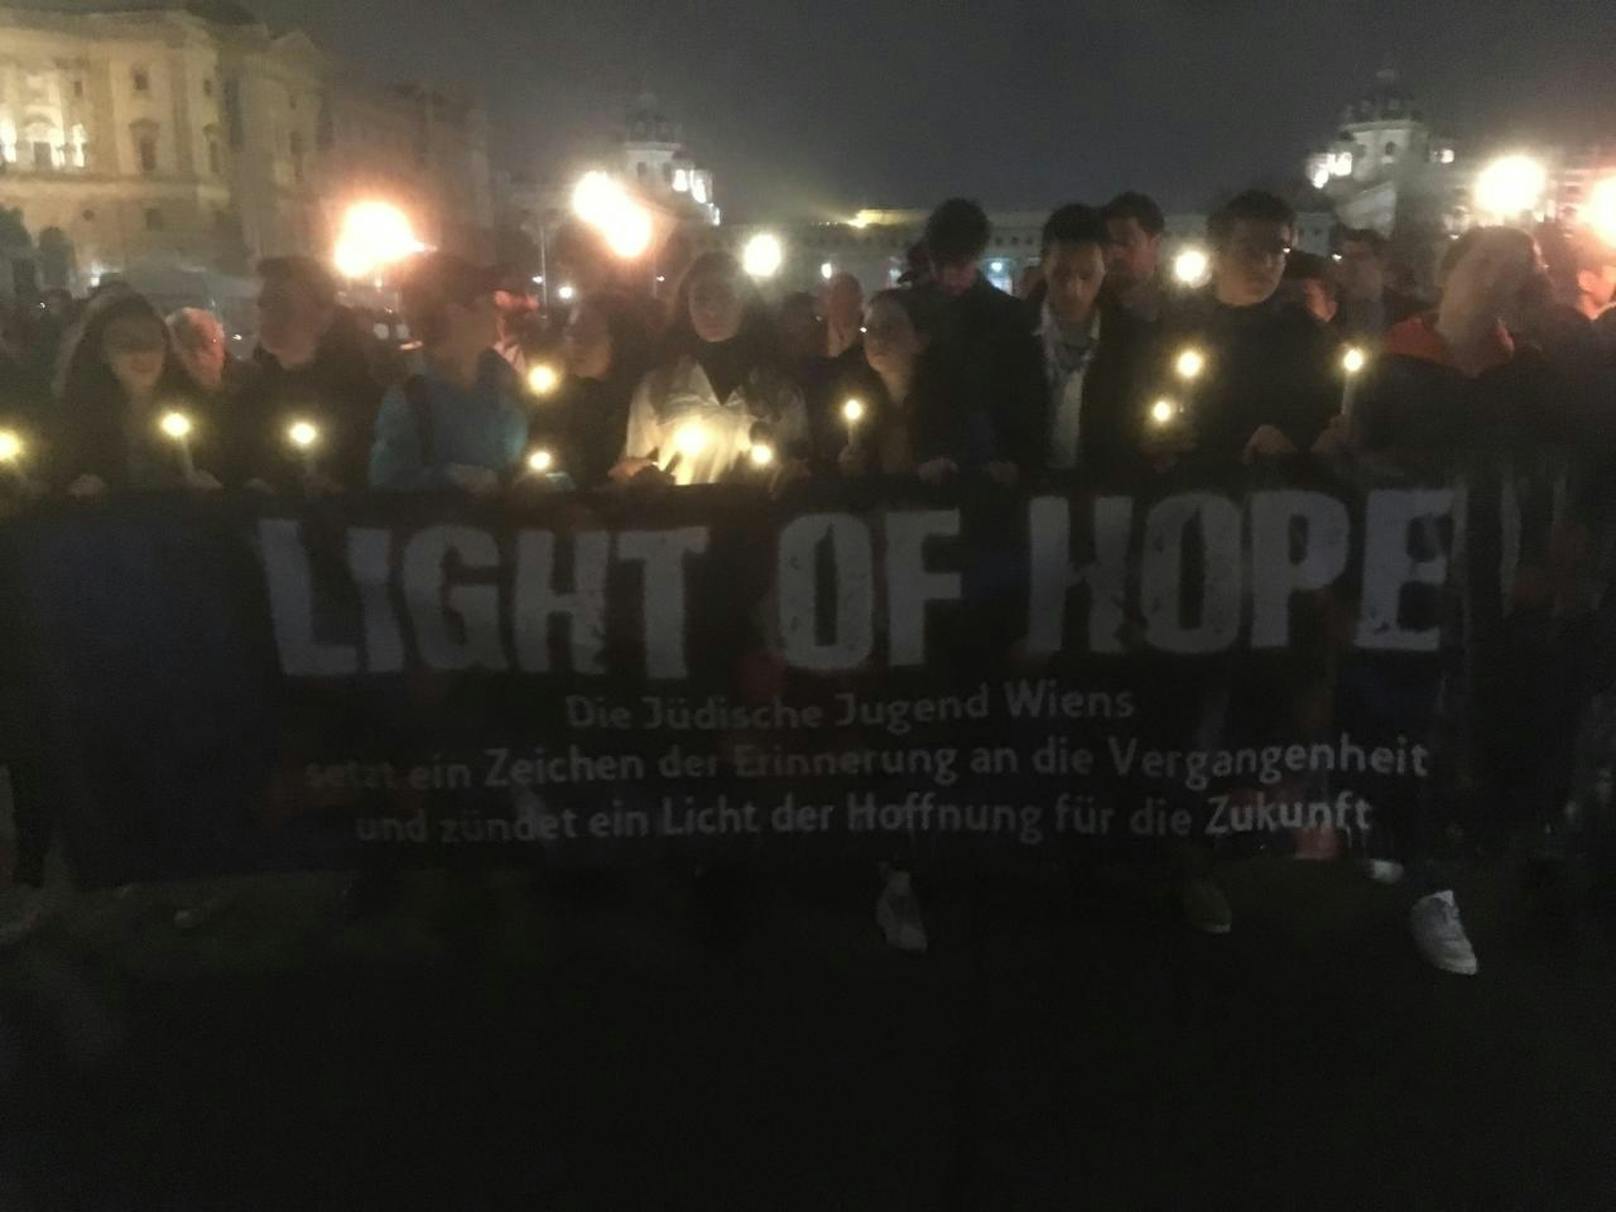 "Light of Hope" am Heldenplatz